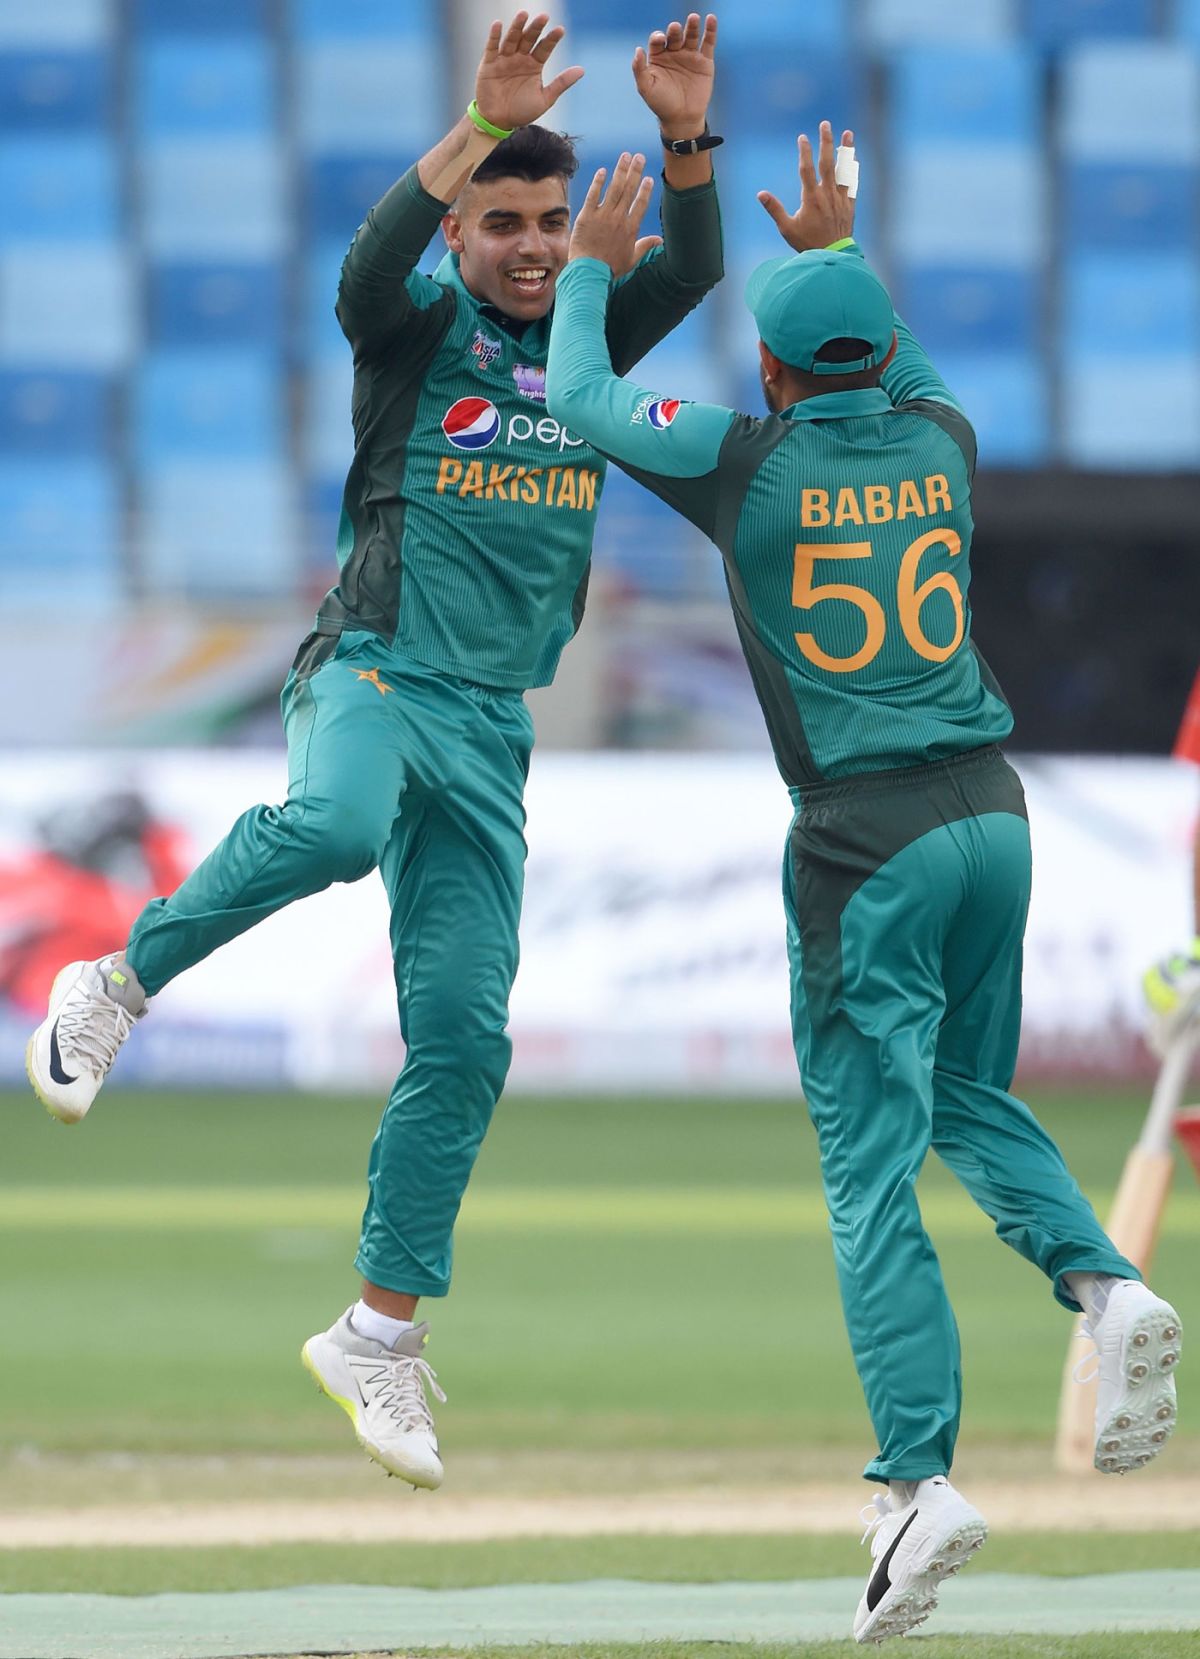 Shadab Khan celebrating after taking a wicket against Hong Kong